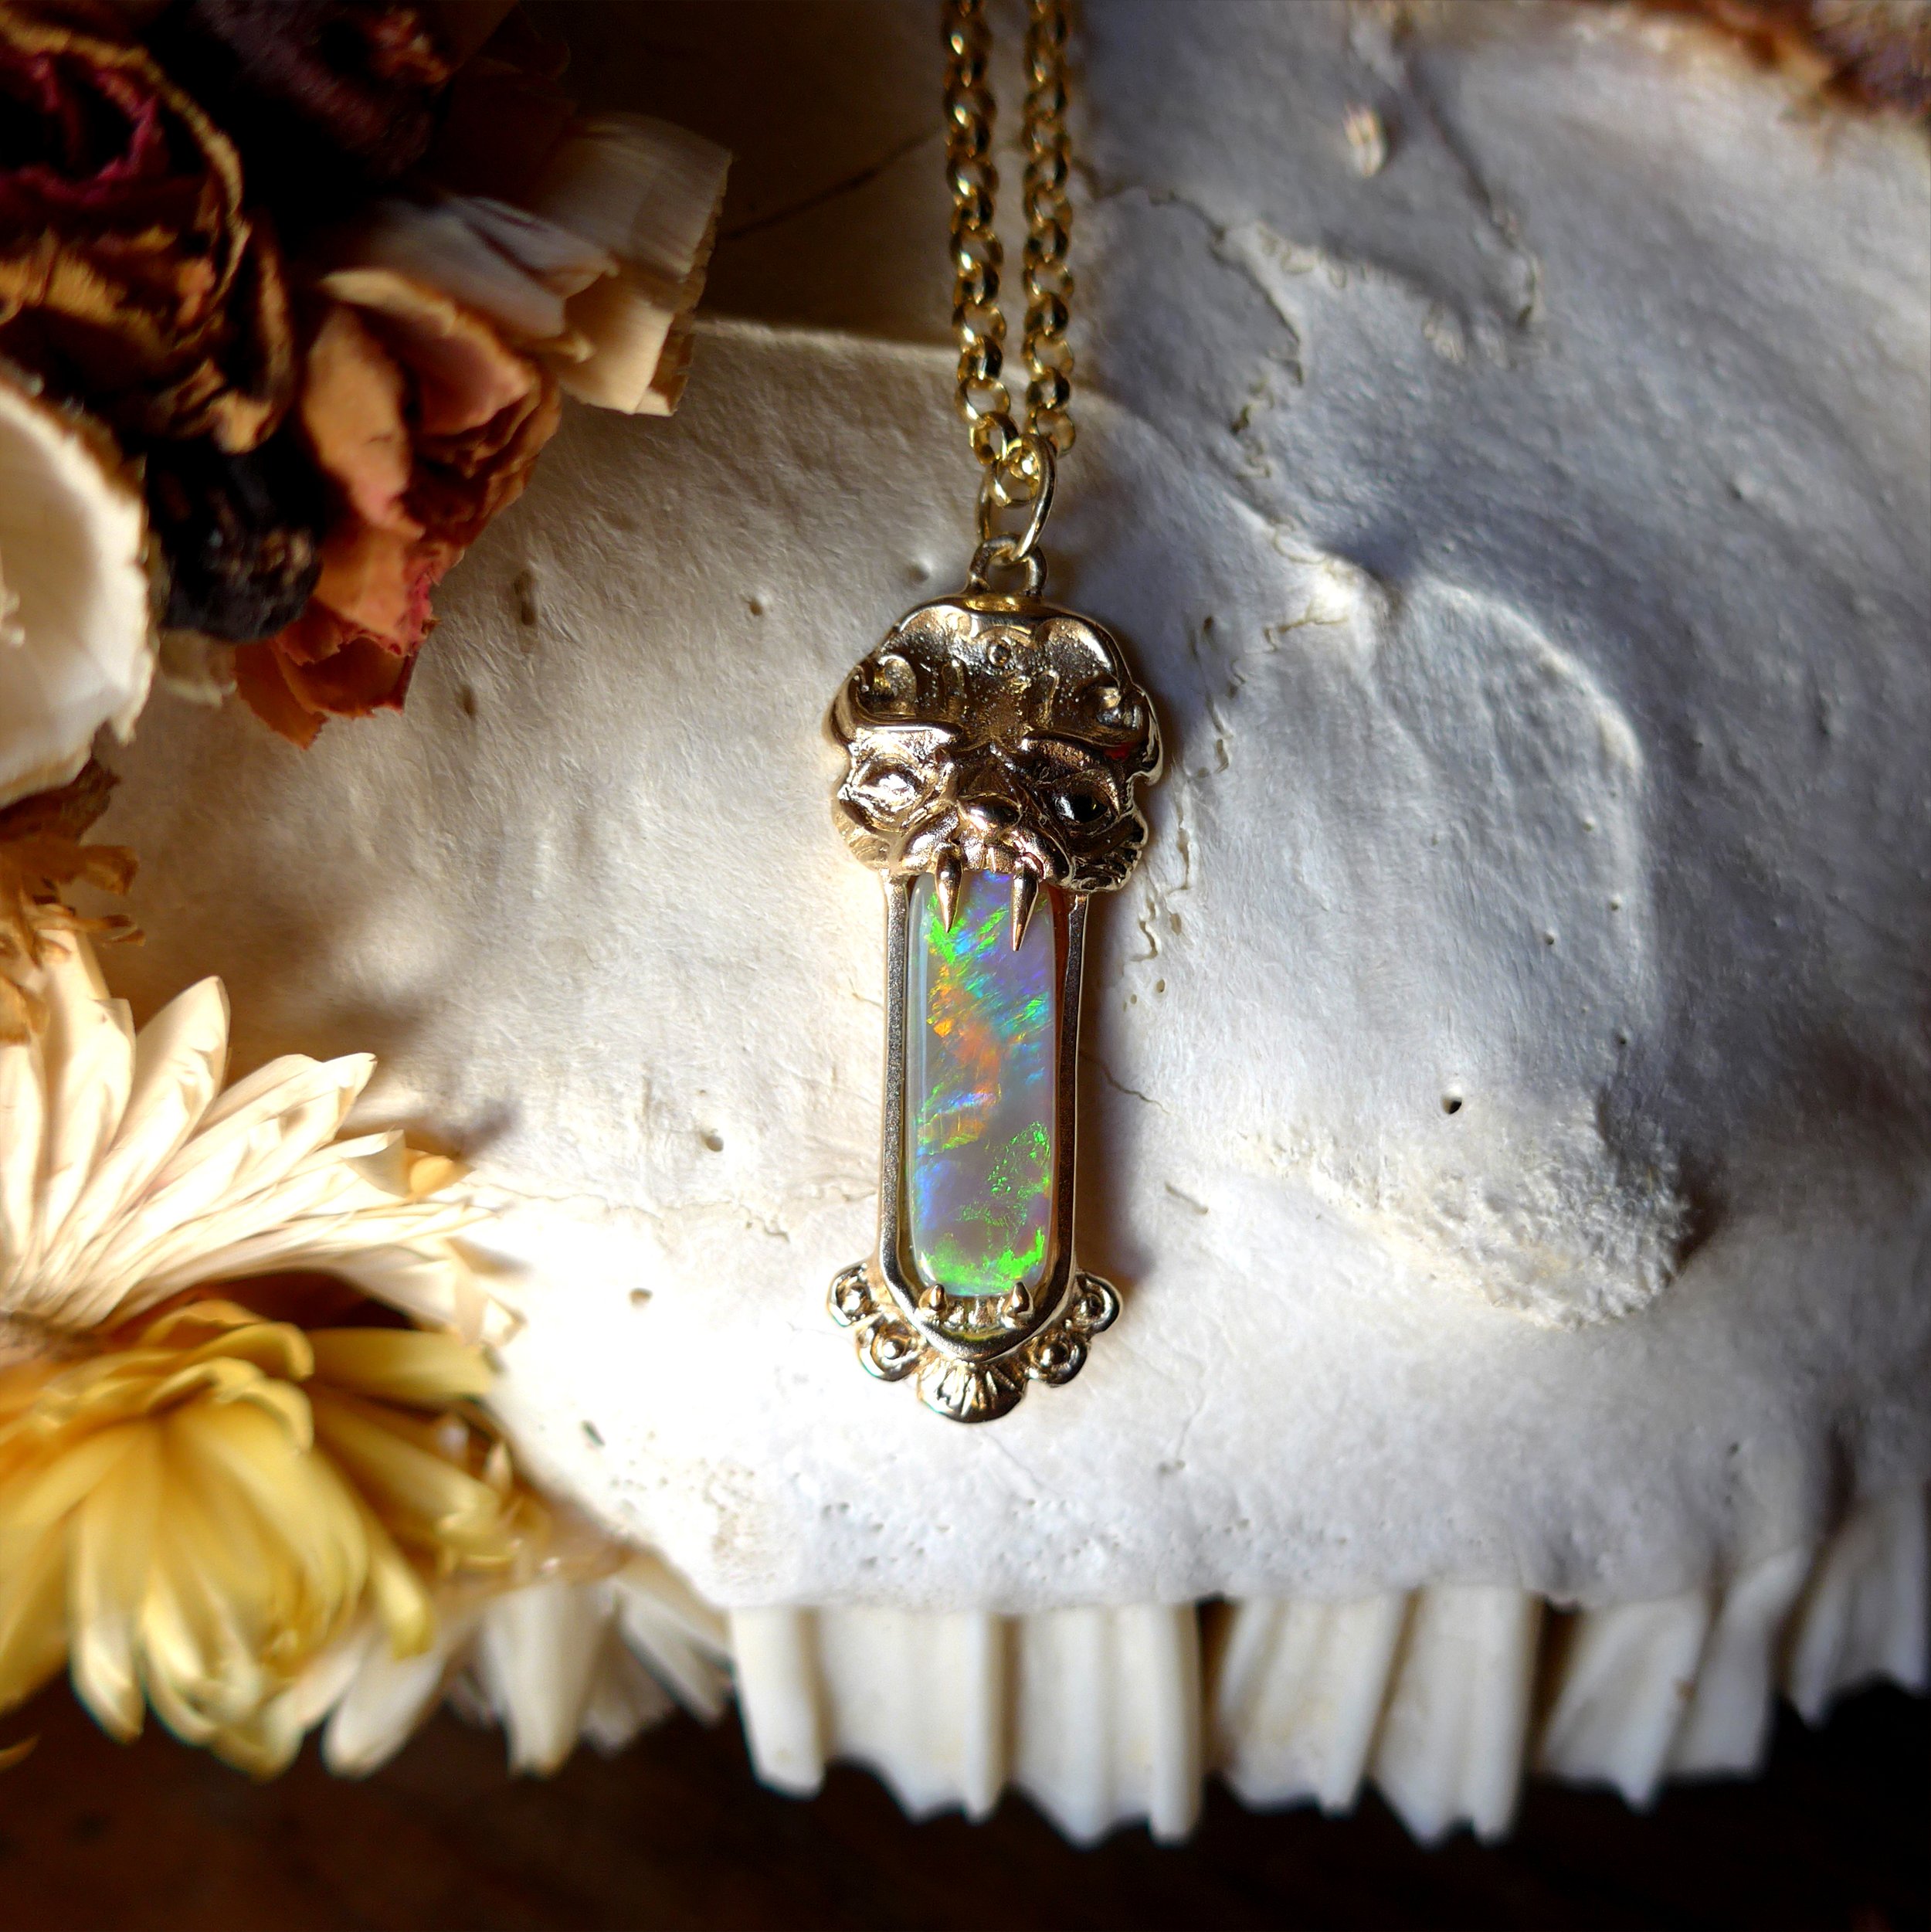 Vintage Opal Bead Necklace